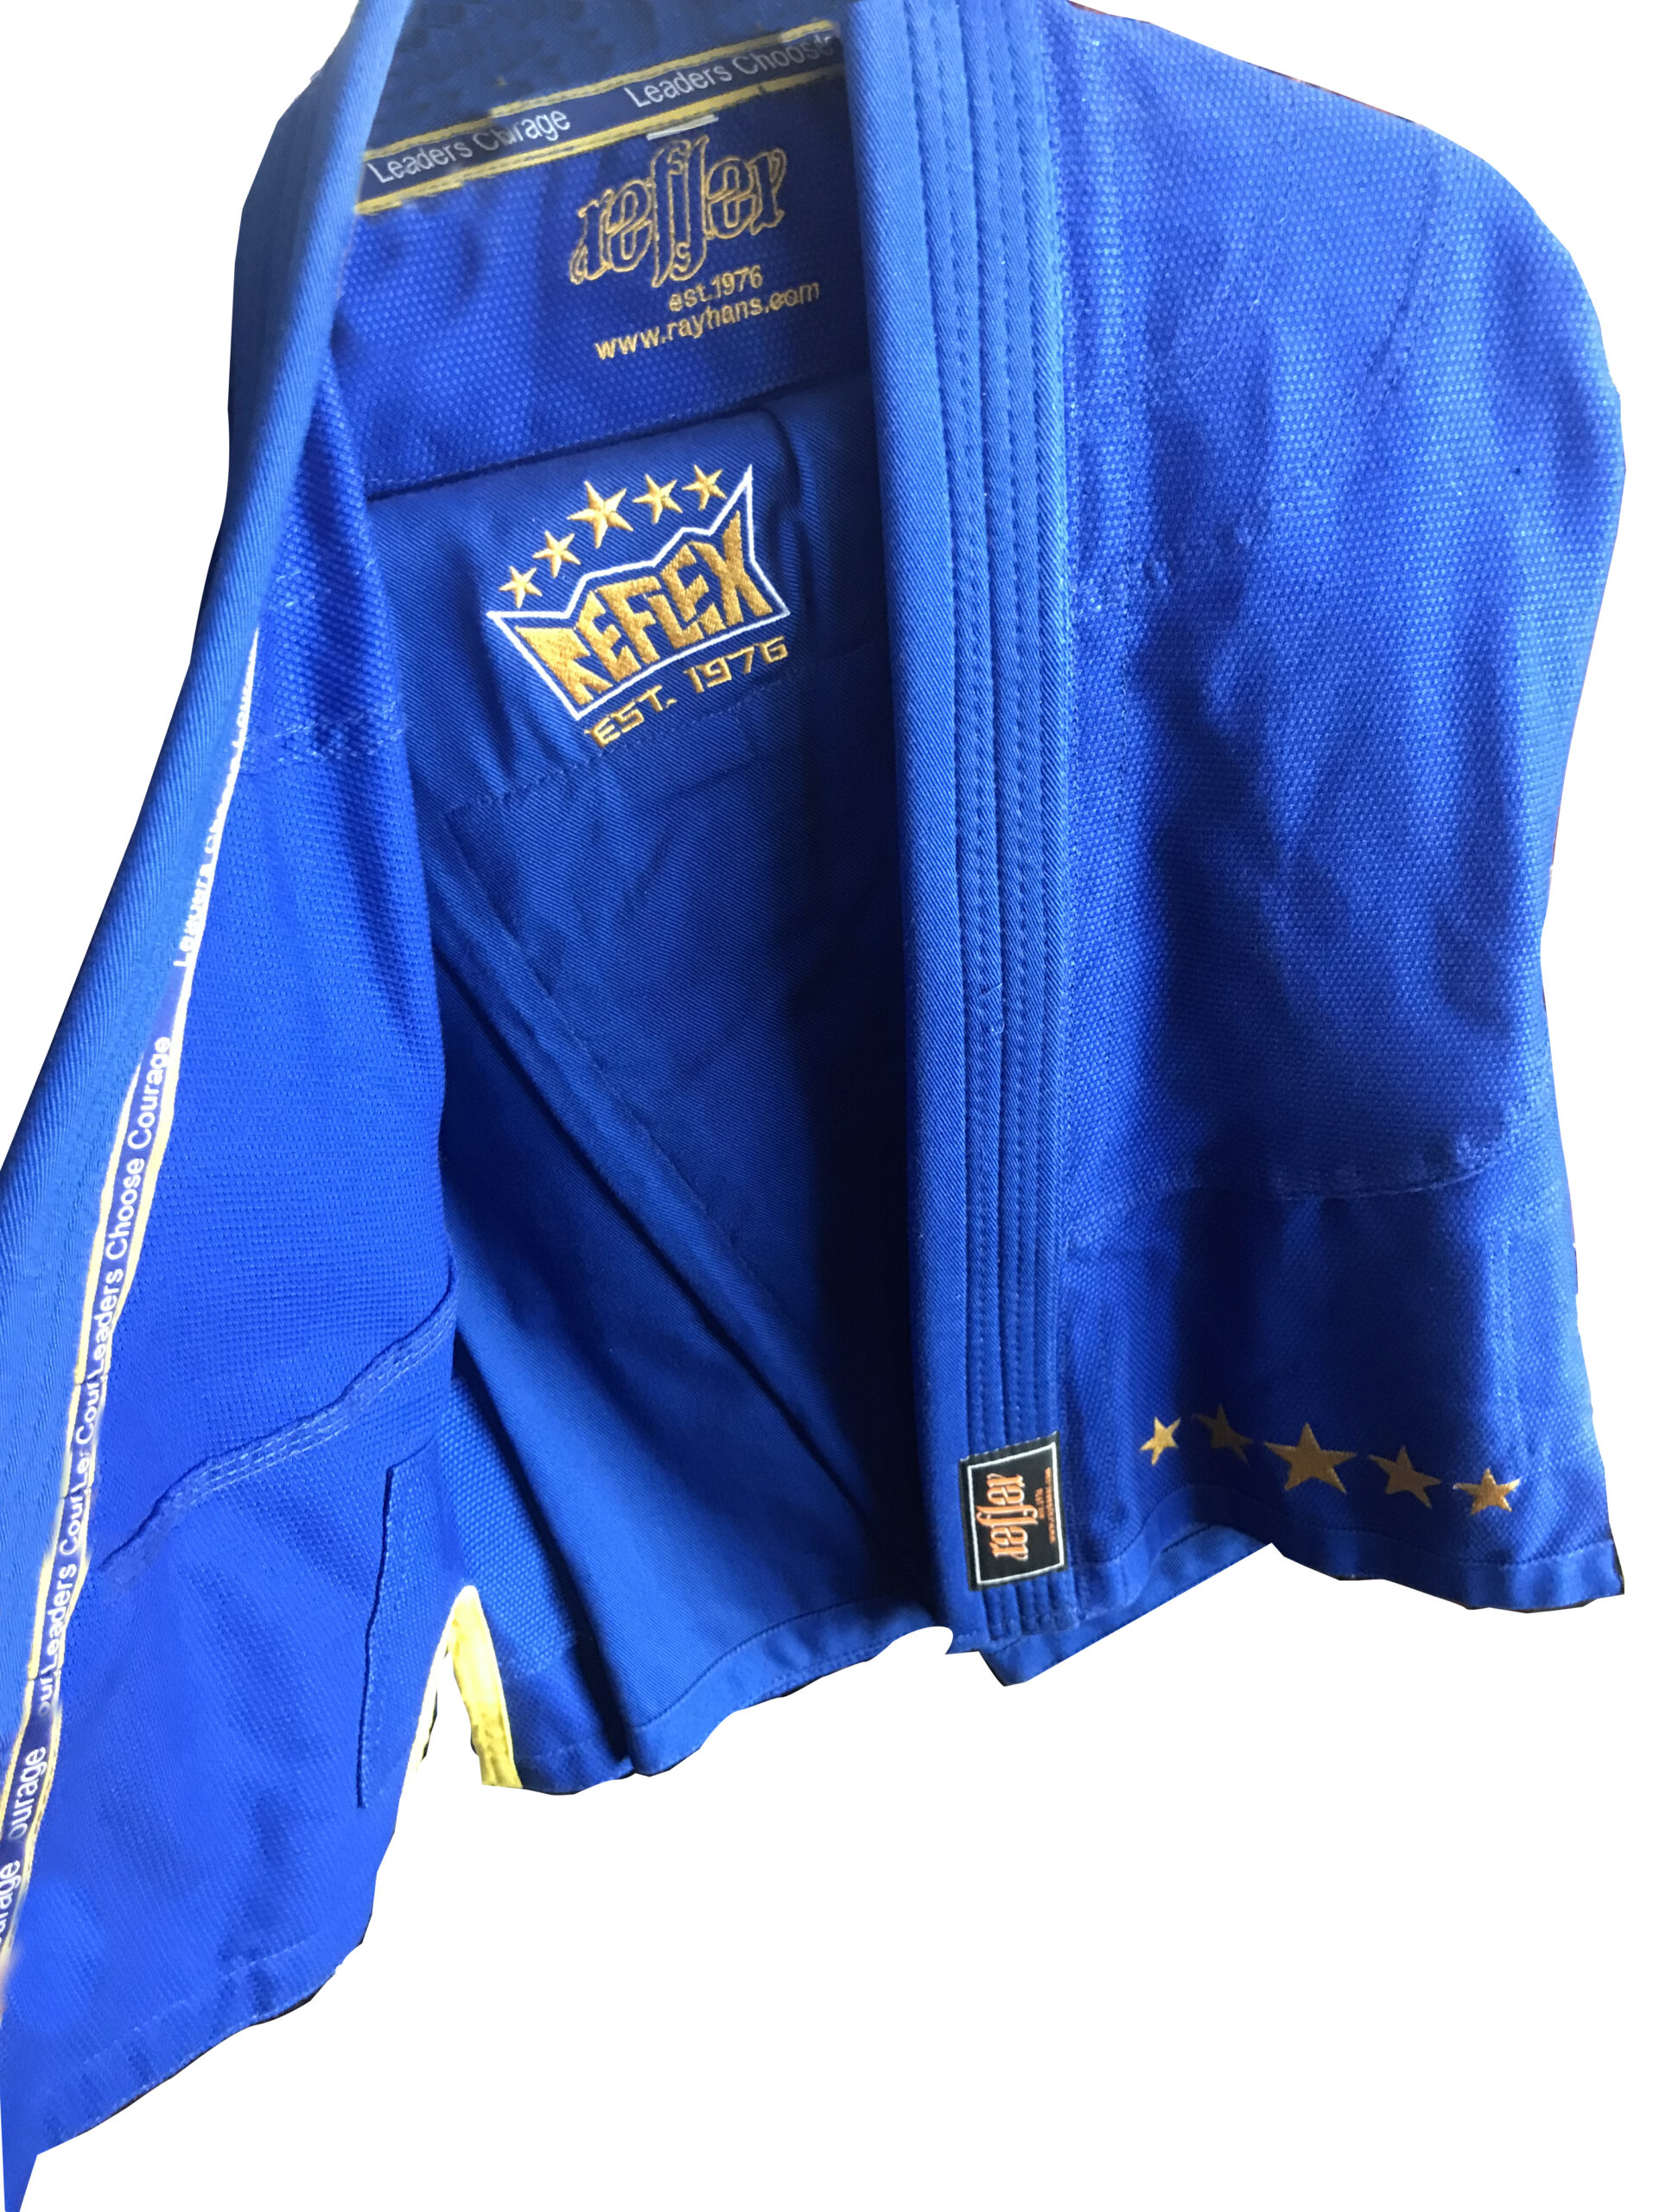 kids bjj gi uniform 100 percent cotton % blue colour quality making lots fof room for dojo patches heavy duty long lasting non shrink